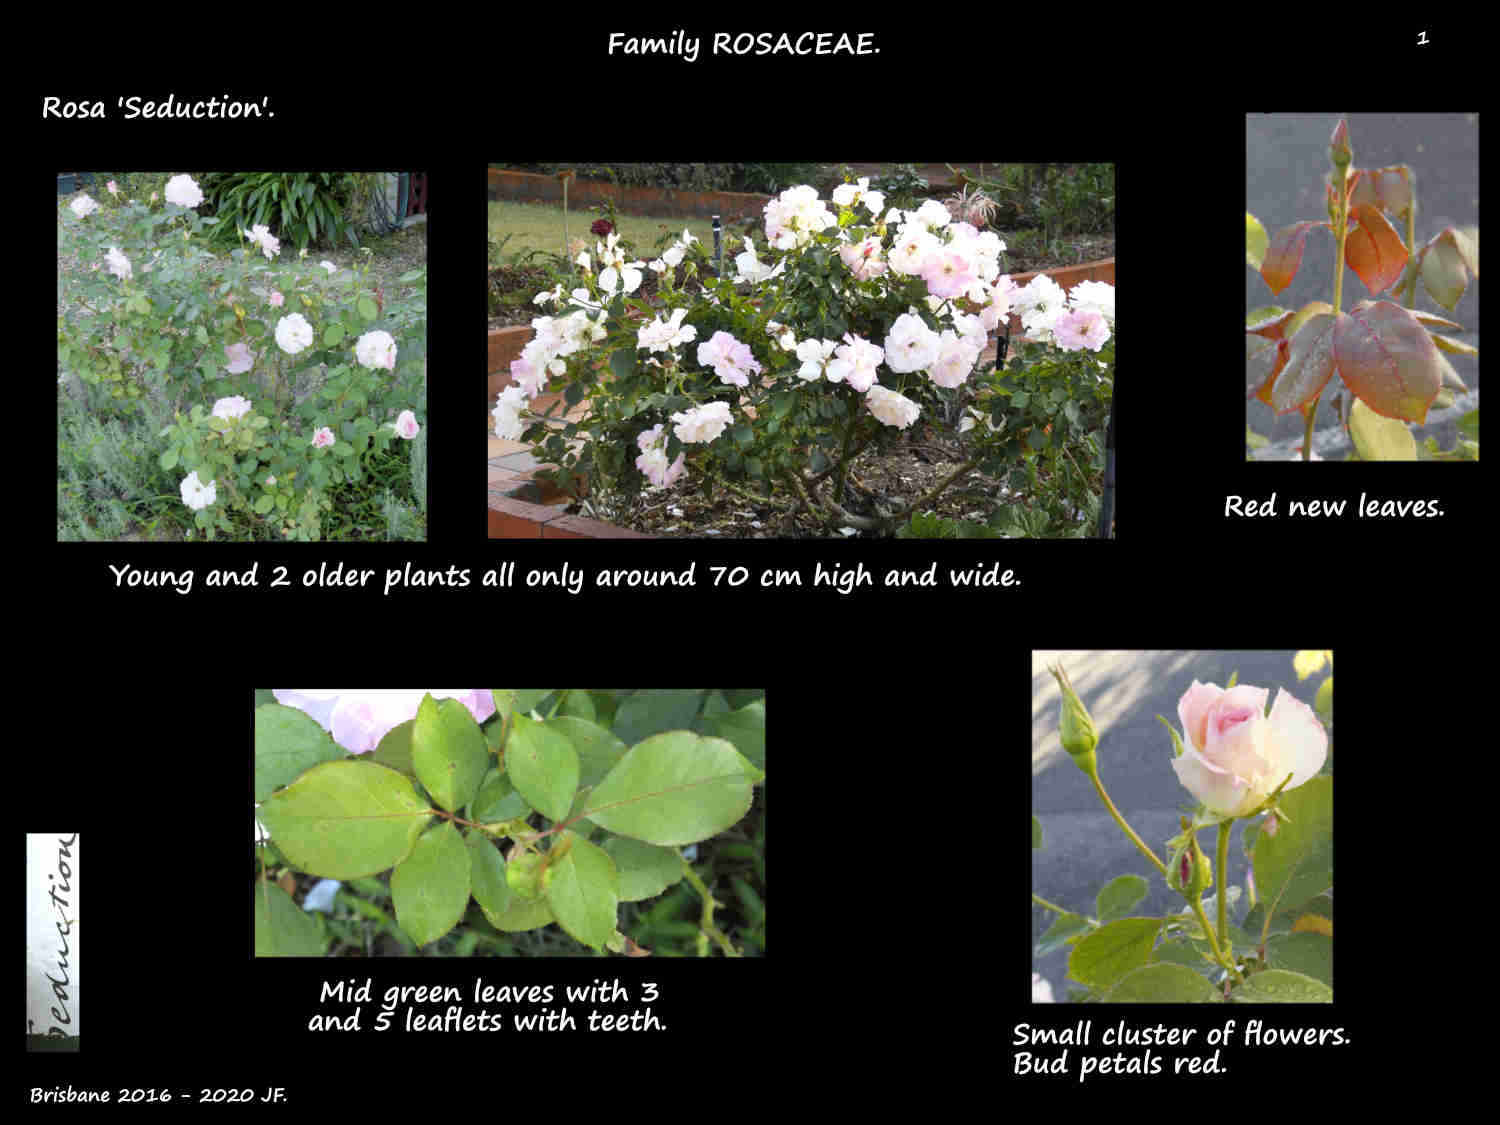 1 Rosa 'Seduction' shrubs & leaves